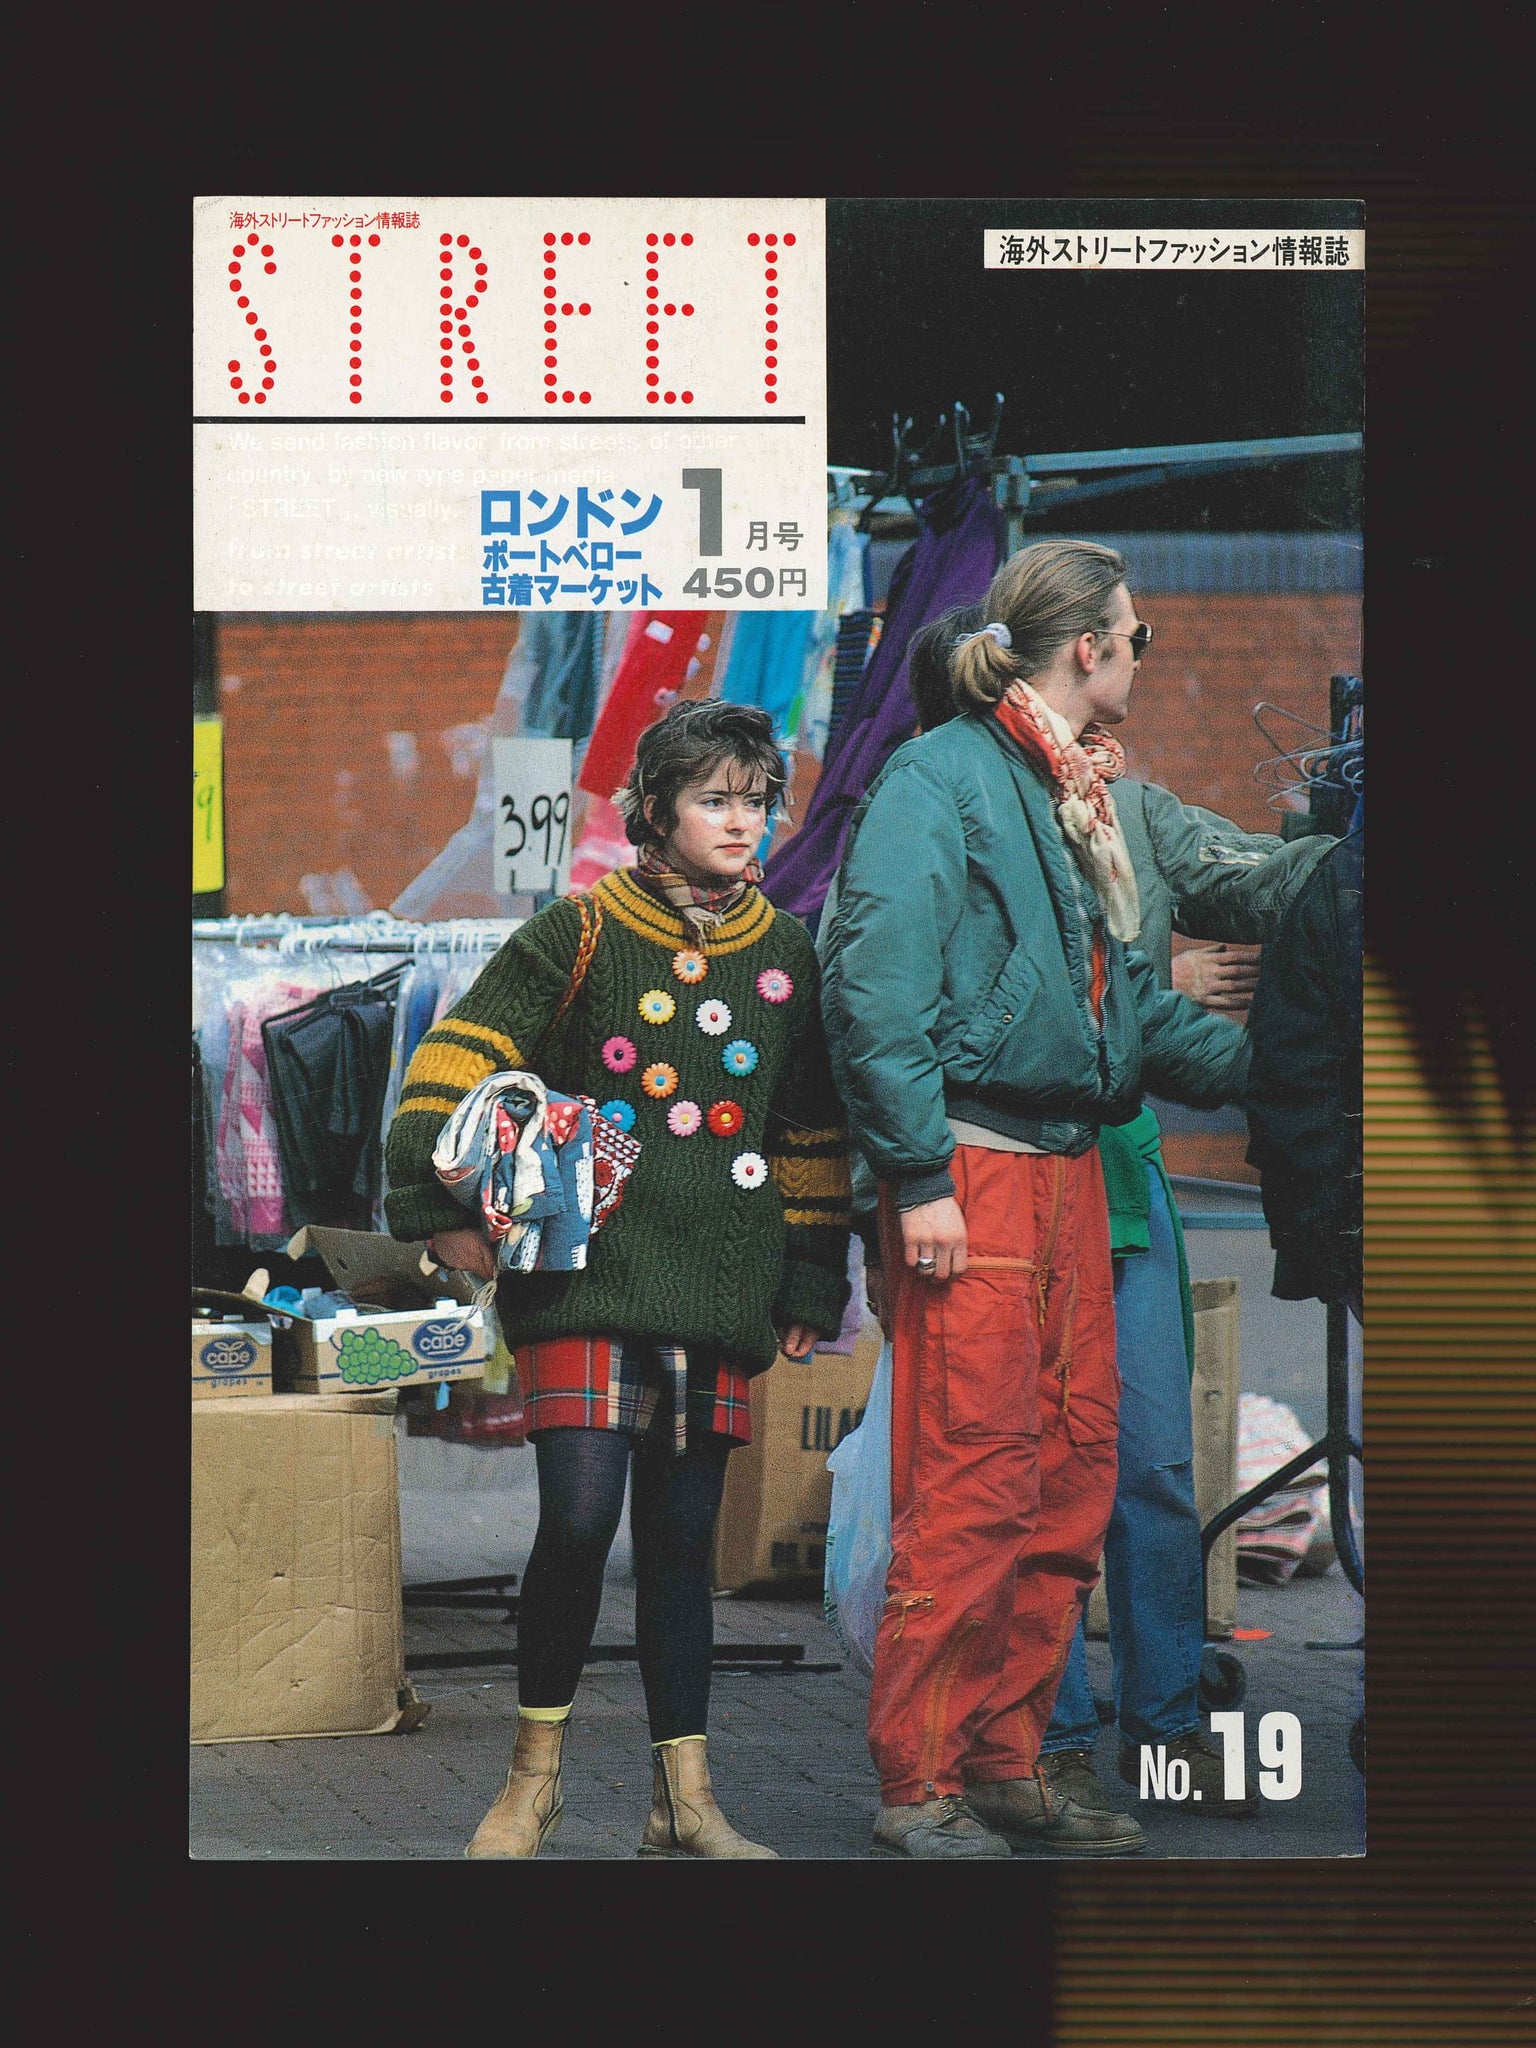 STREET magazine no. 19 / jan 1989 / portobello flea market london / Shoichi Aoki